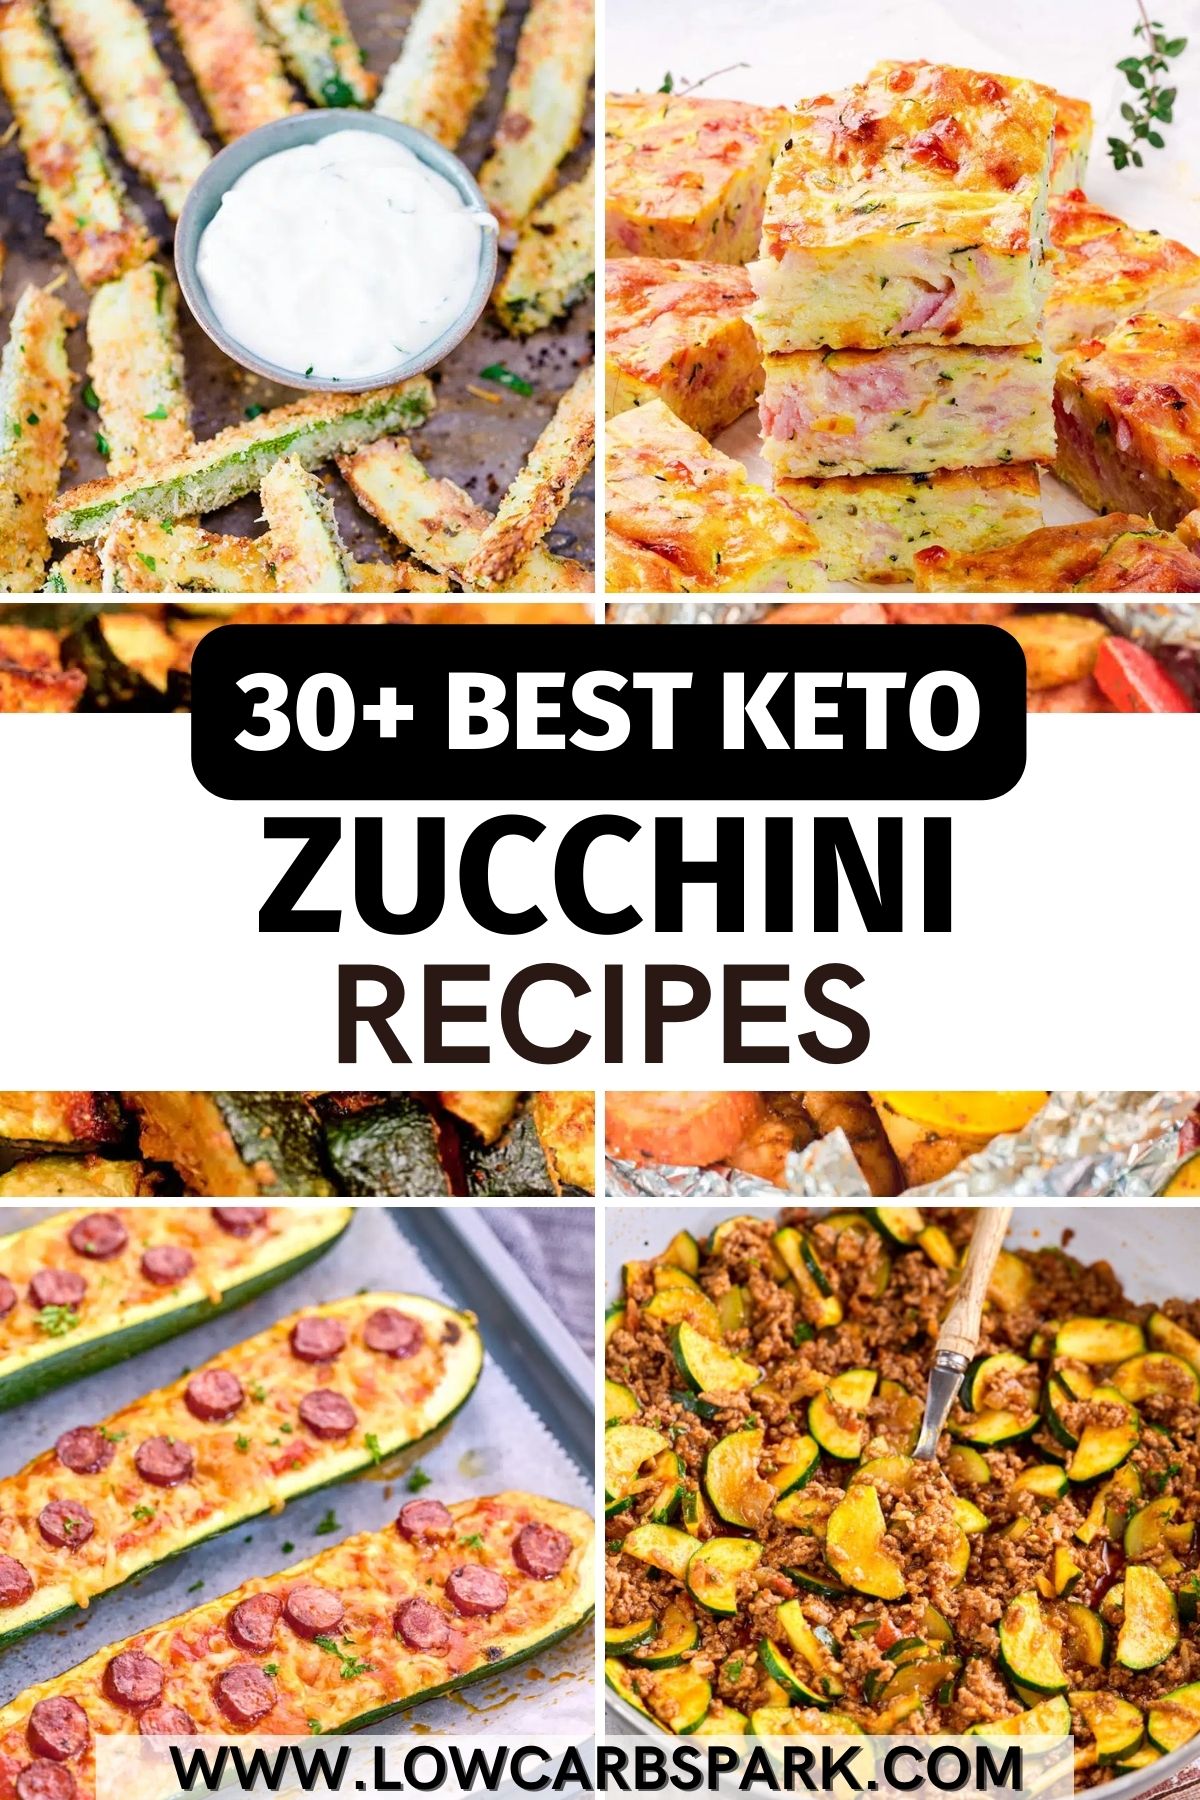 30+ Best Keto Zucchini Recipes